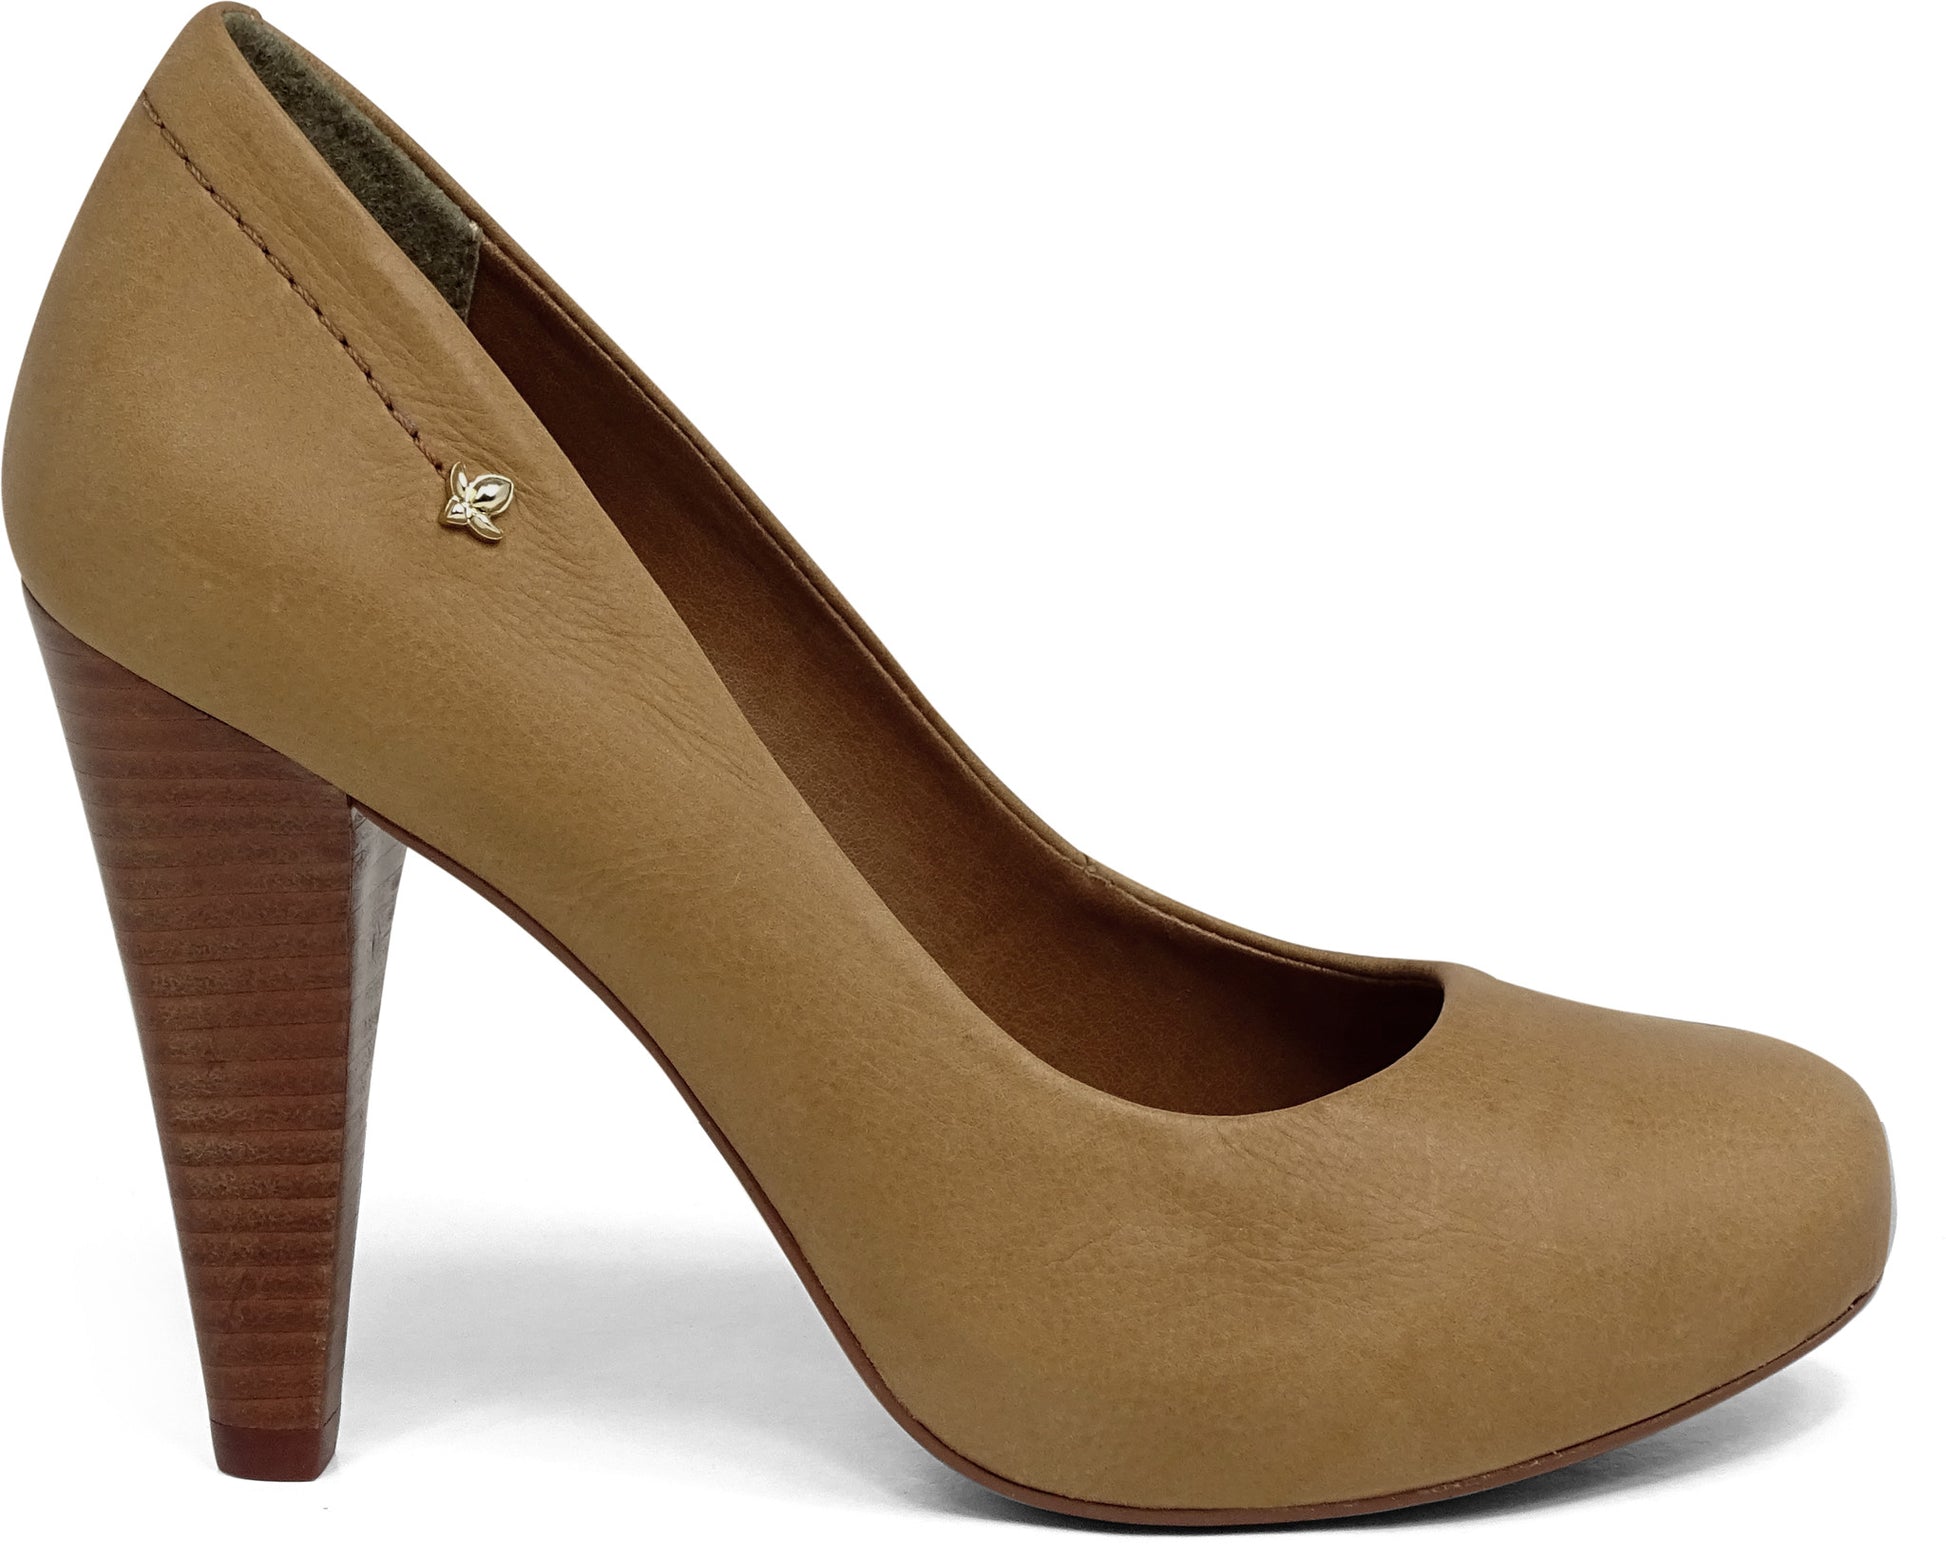 Scarpin Soft Camel Wood Heel - Cravo e Canela - ZapTo Shoes